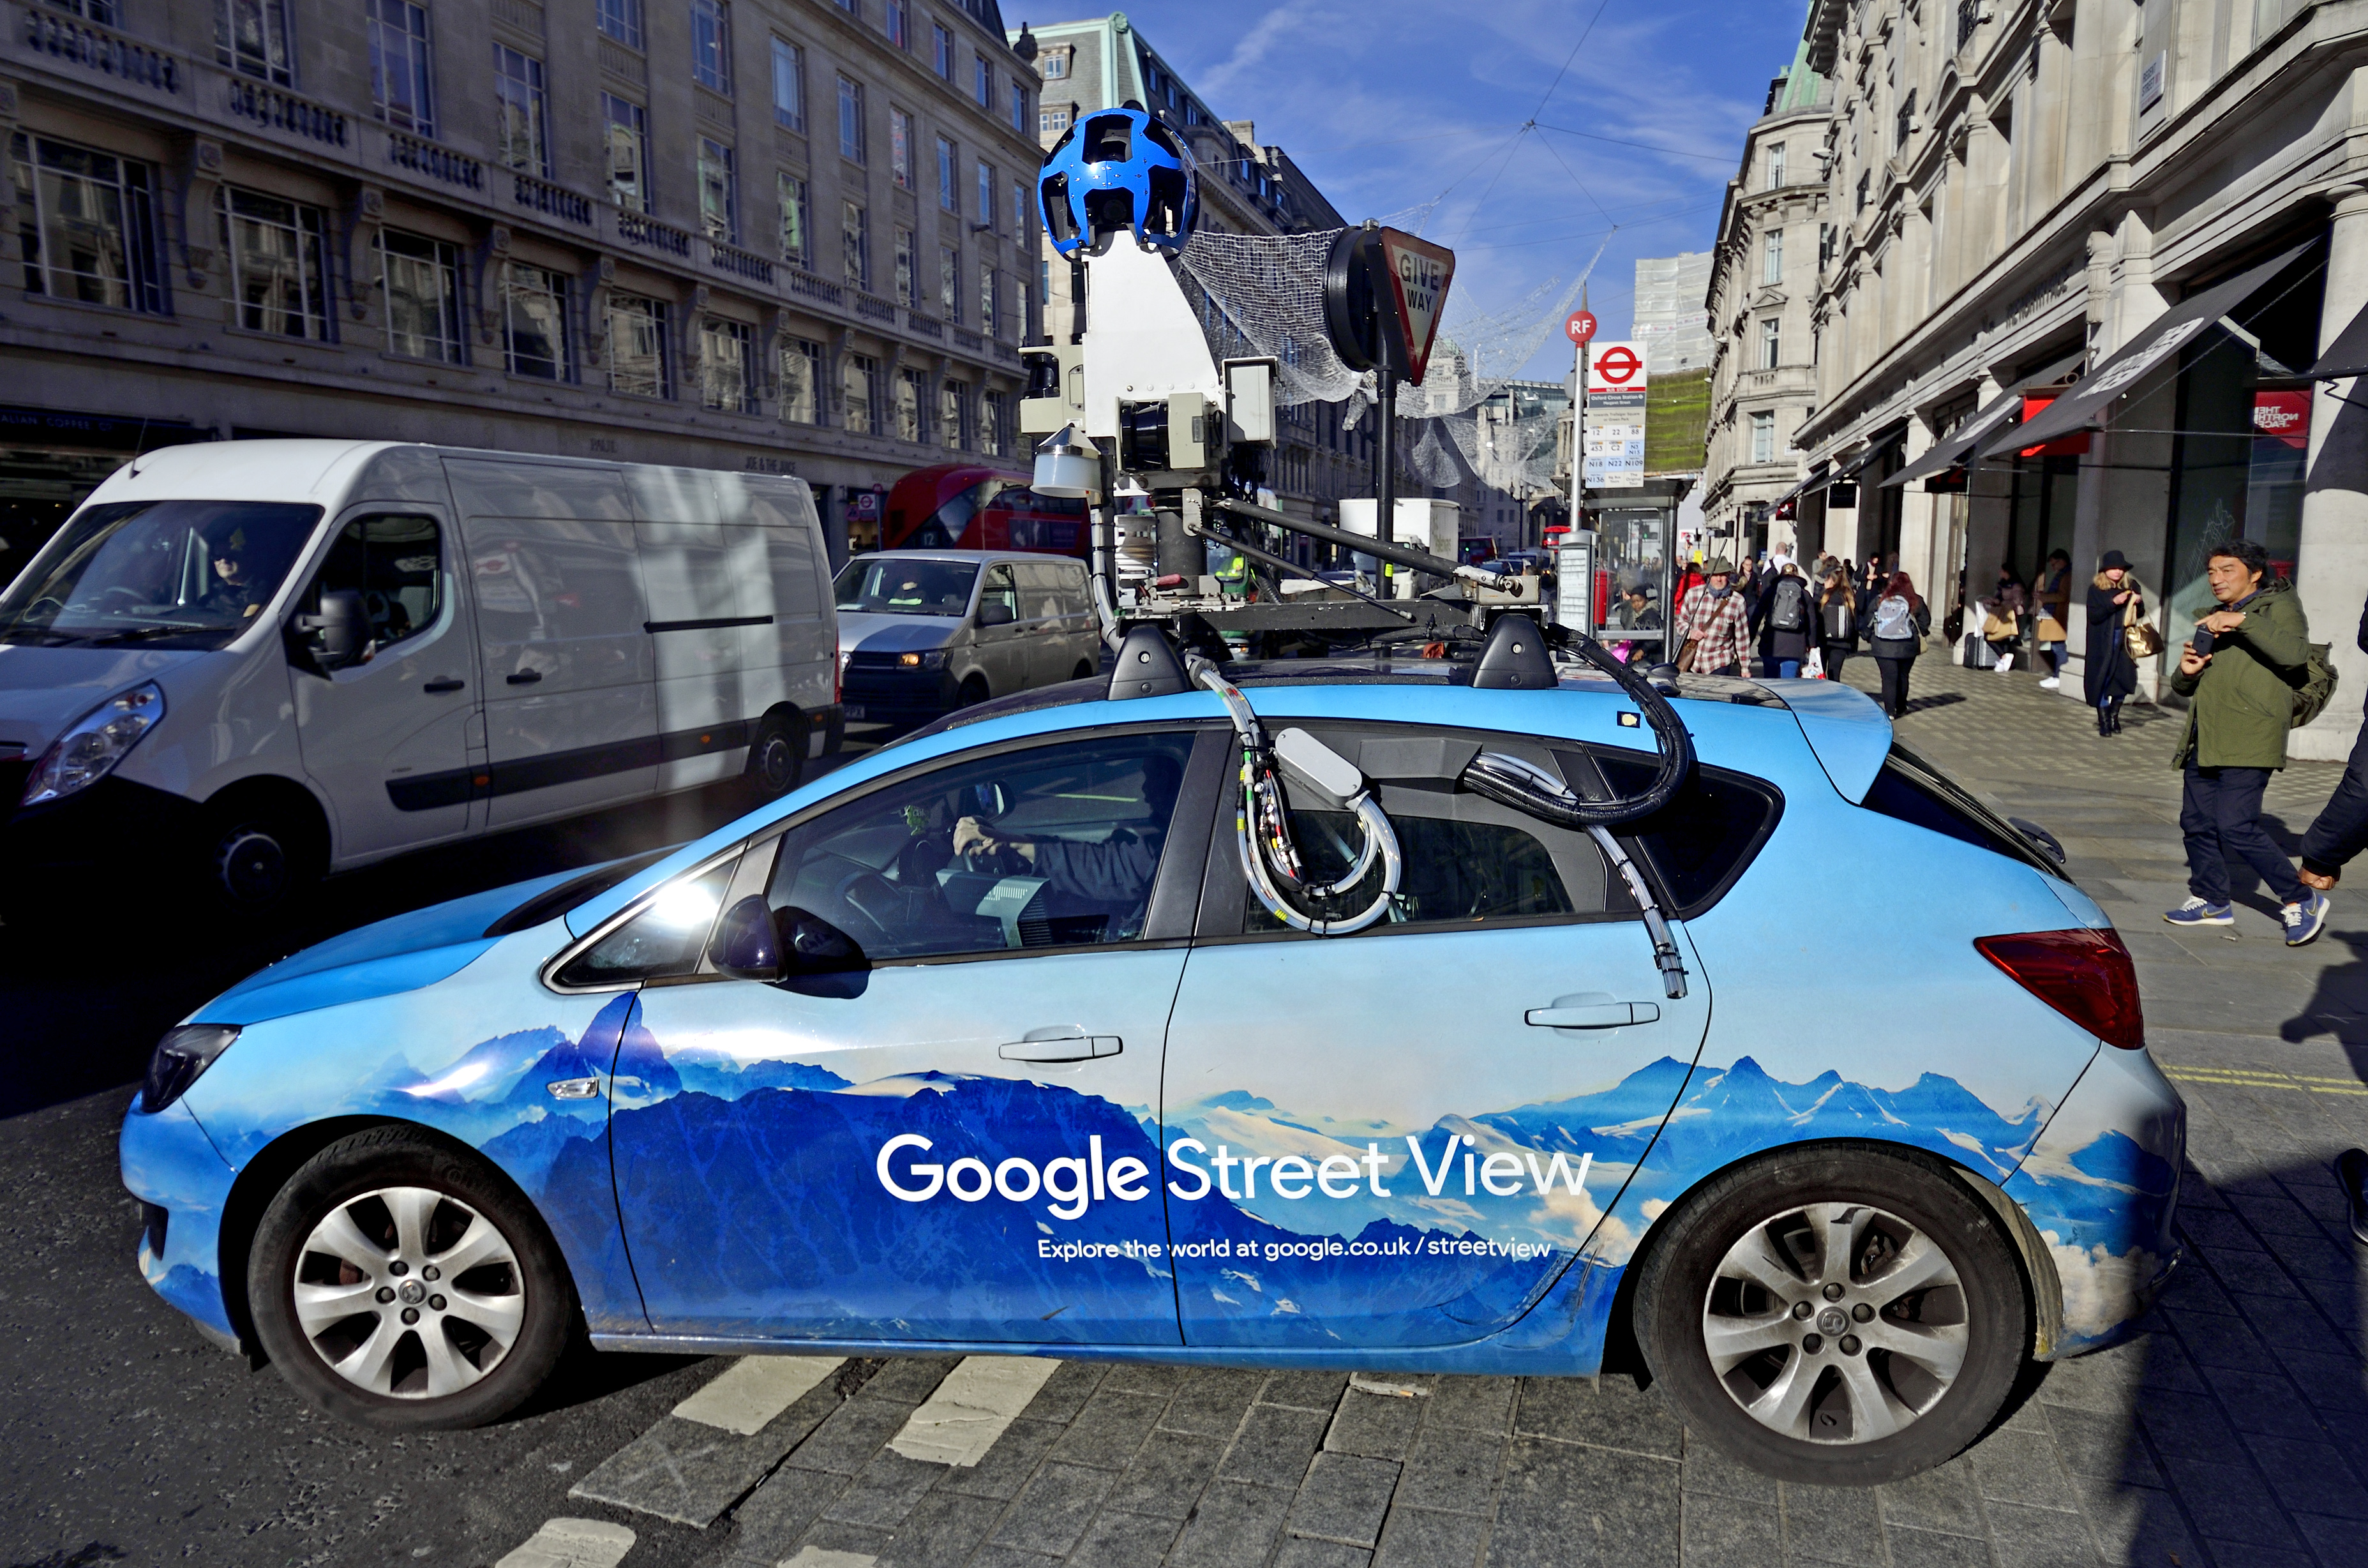 A Google Street View car navigates a crowded street.